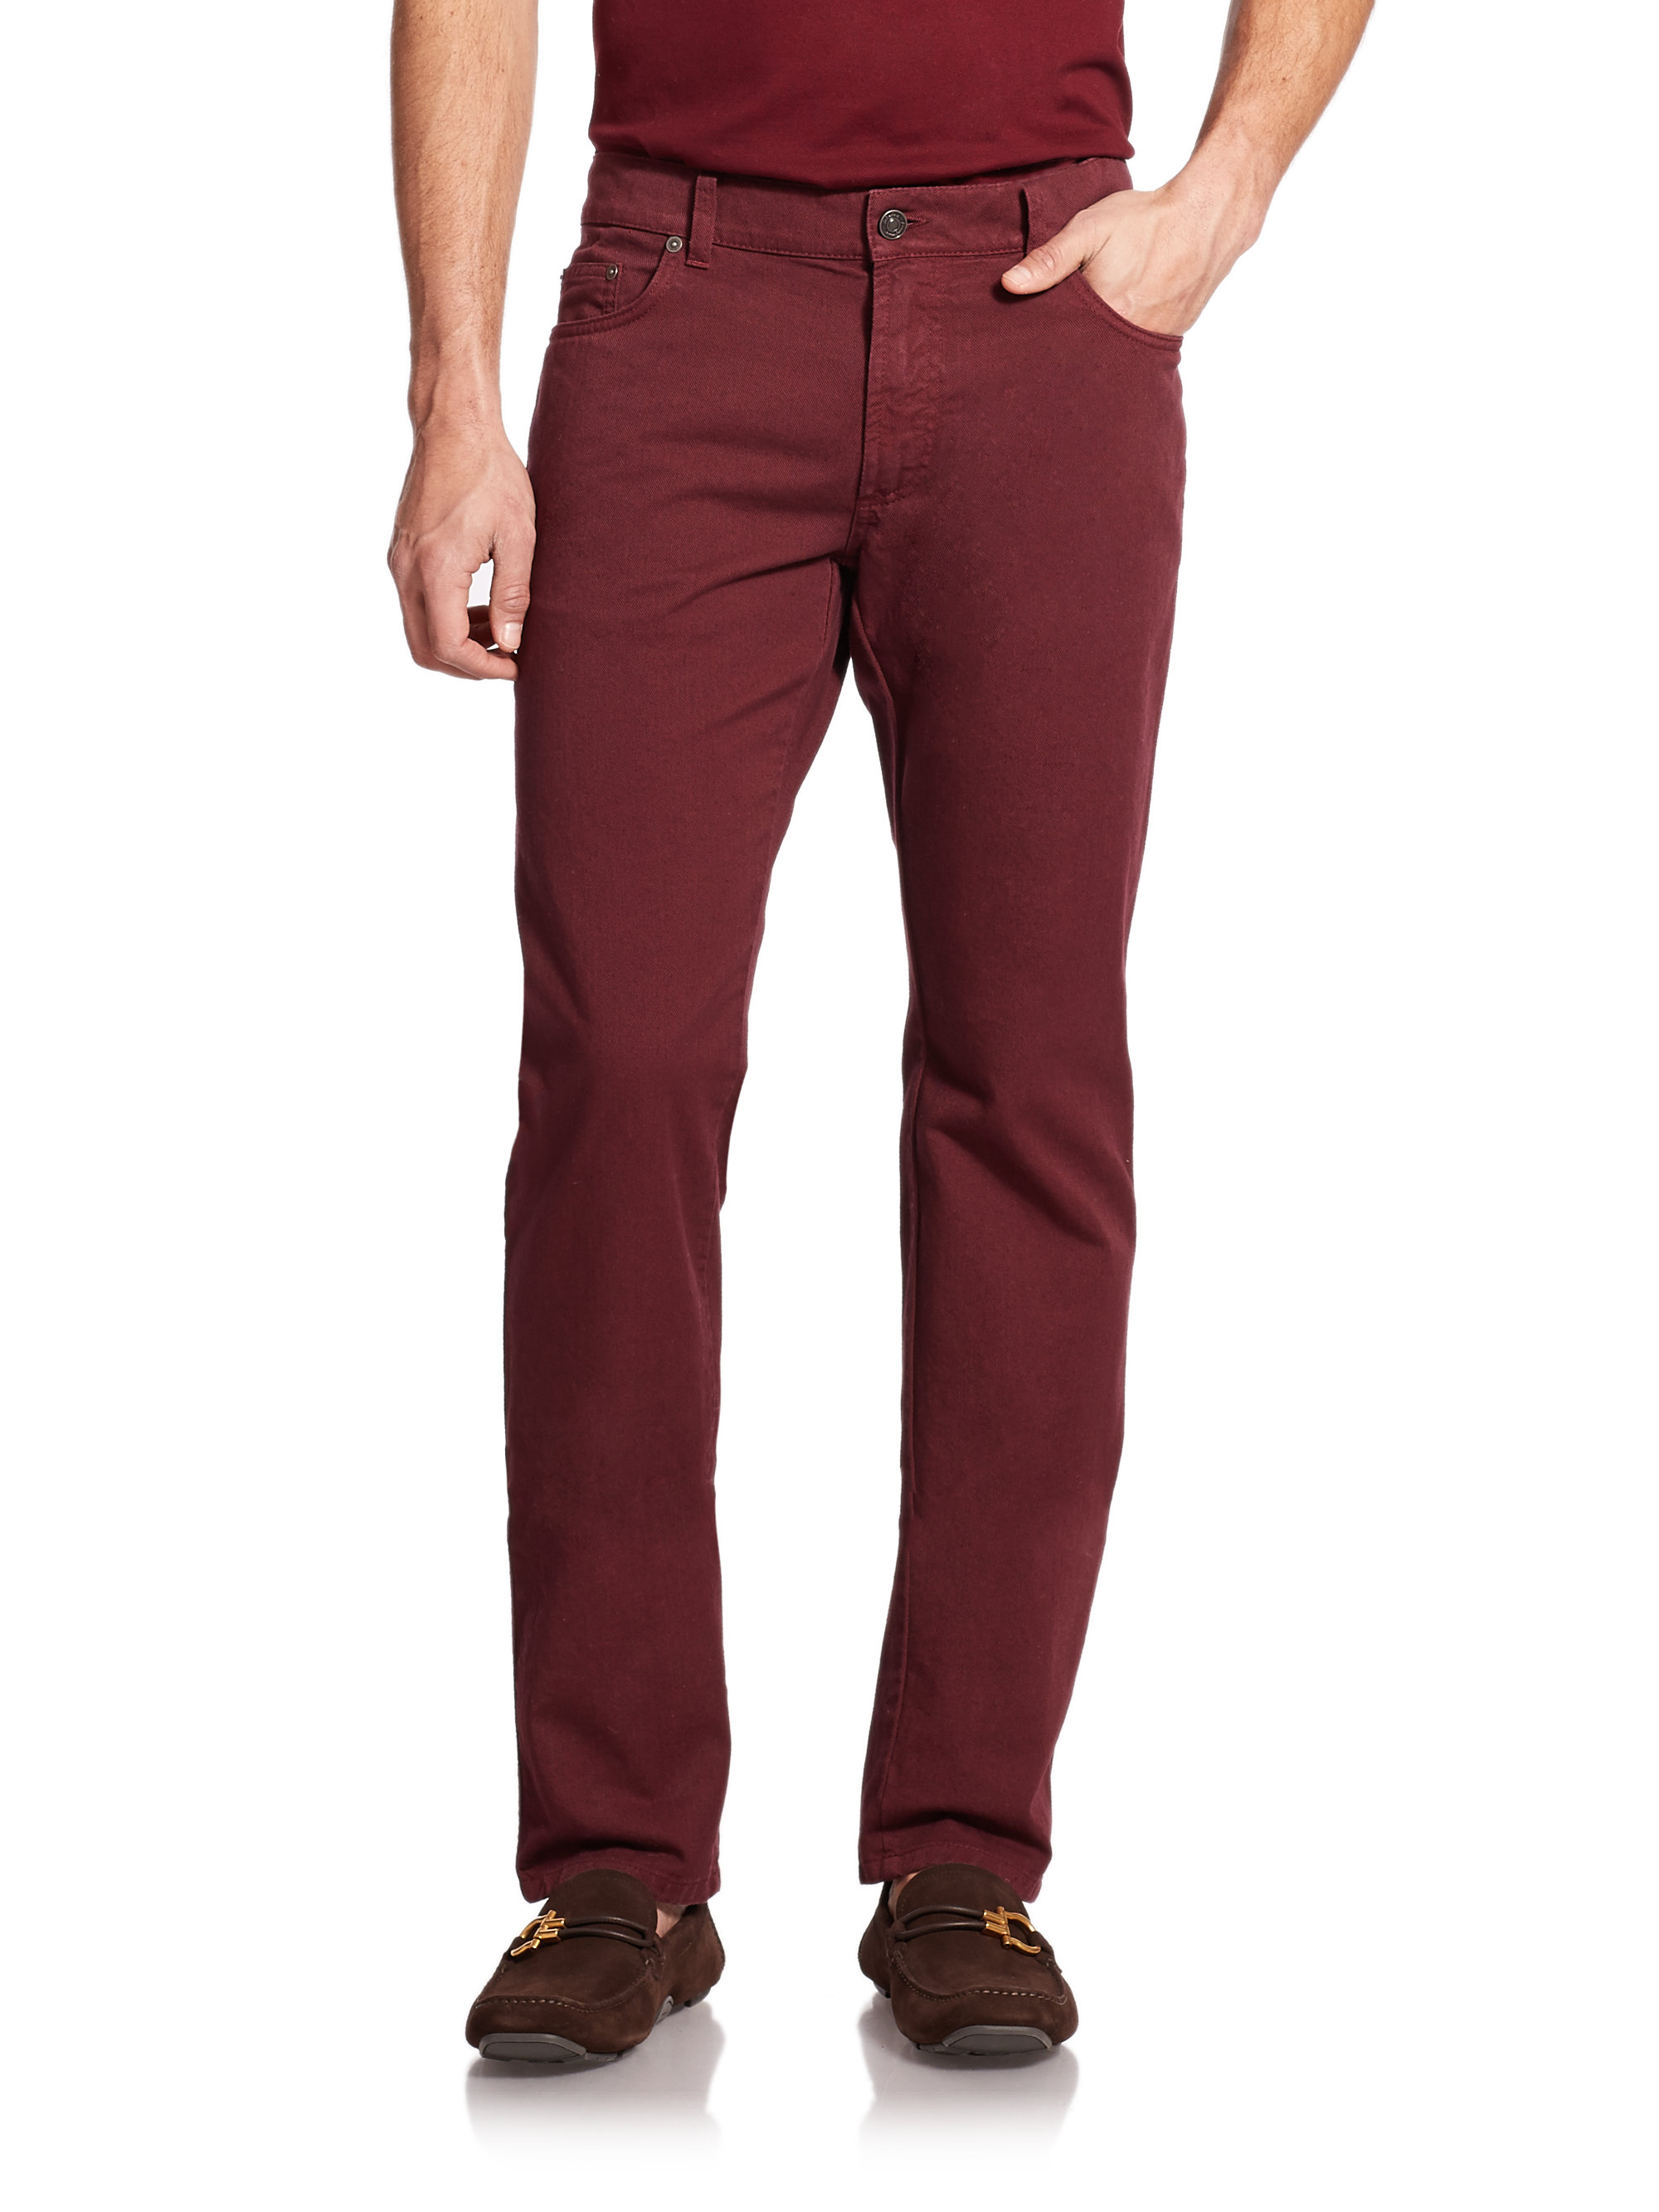 Lyst - Ferragamo Straight-leg Jeans in Red for Men